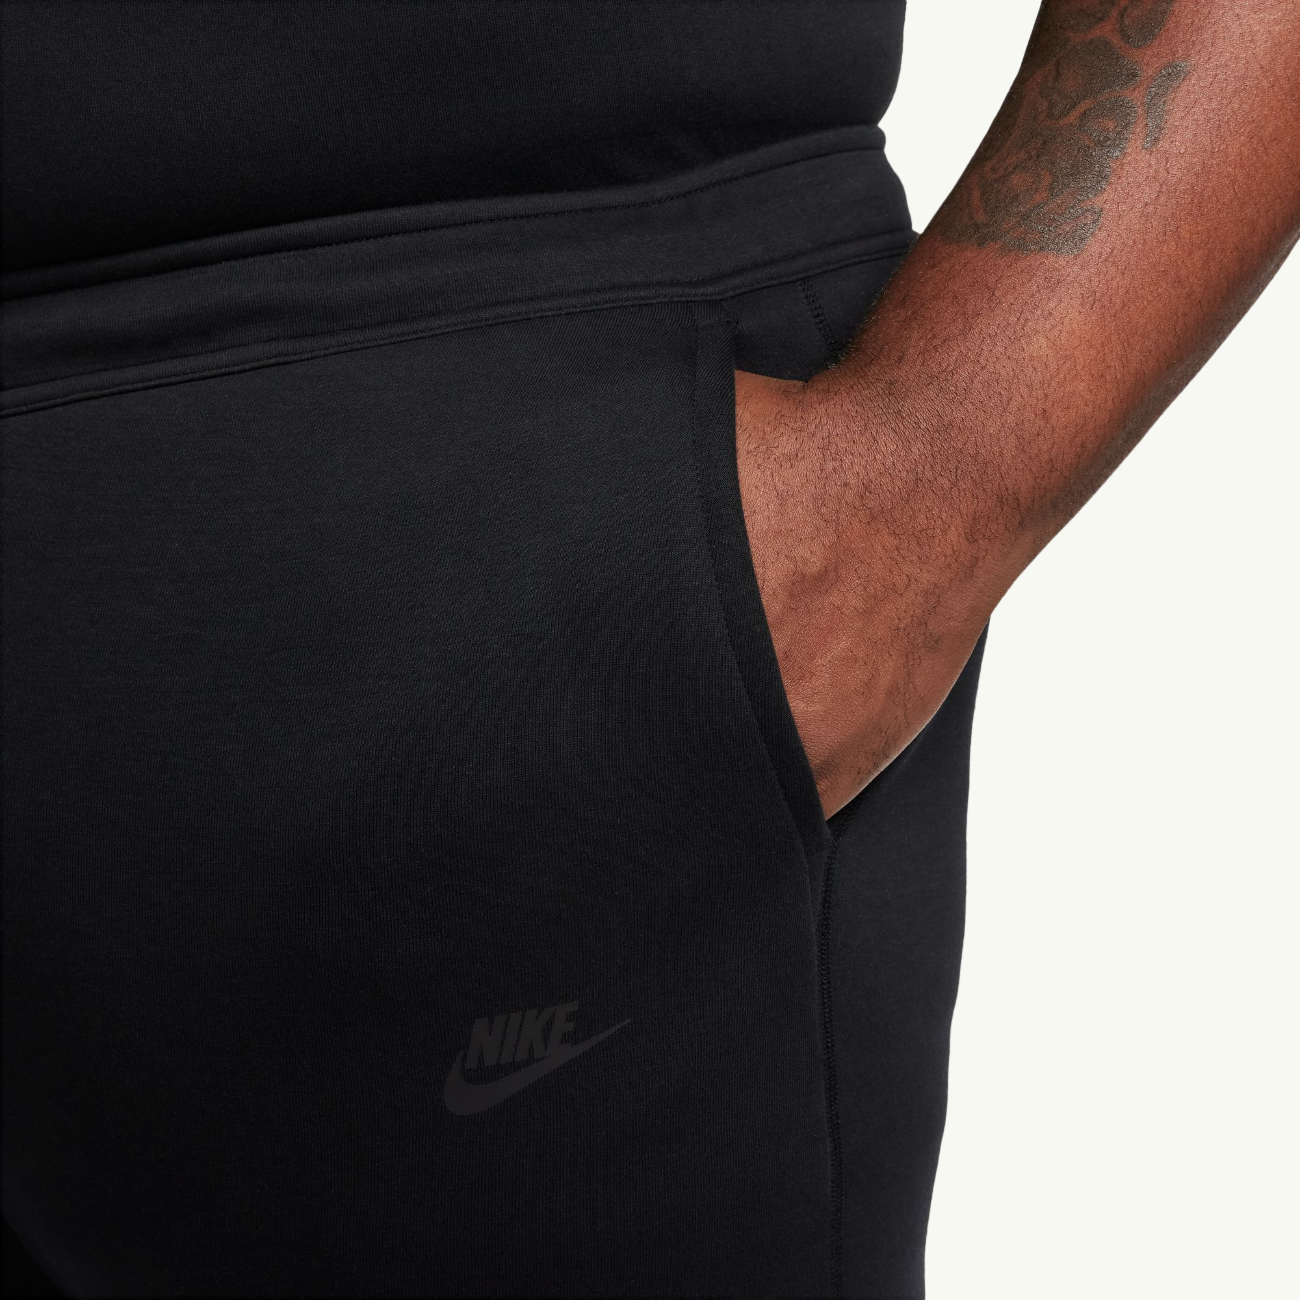 Nike Tech Fleece Jogger - Black